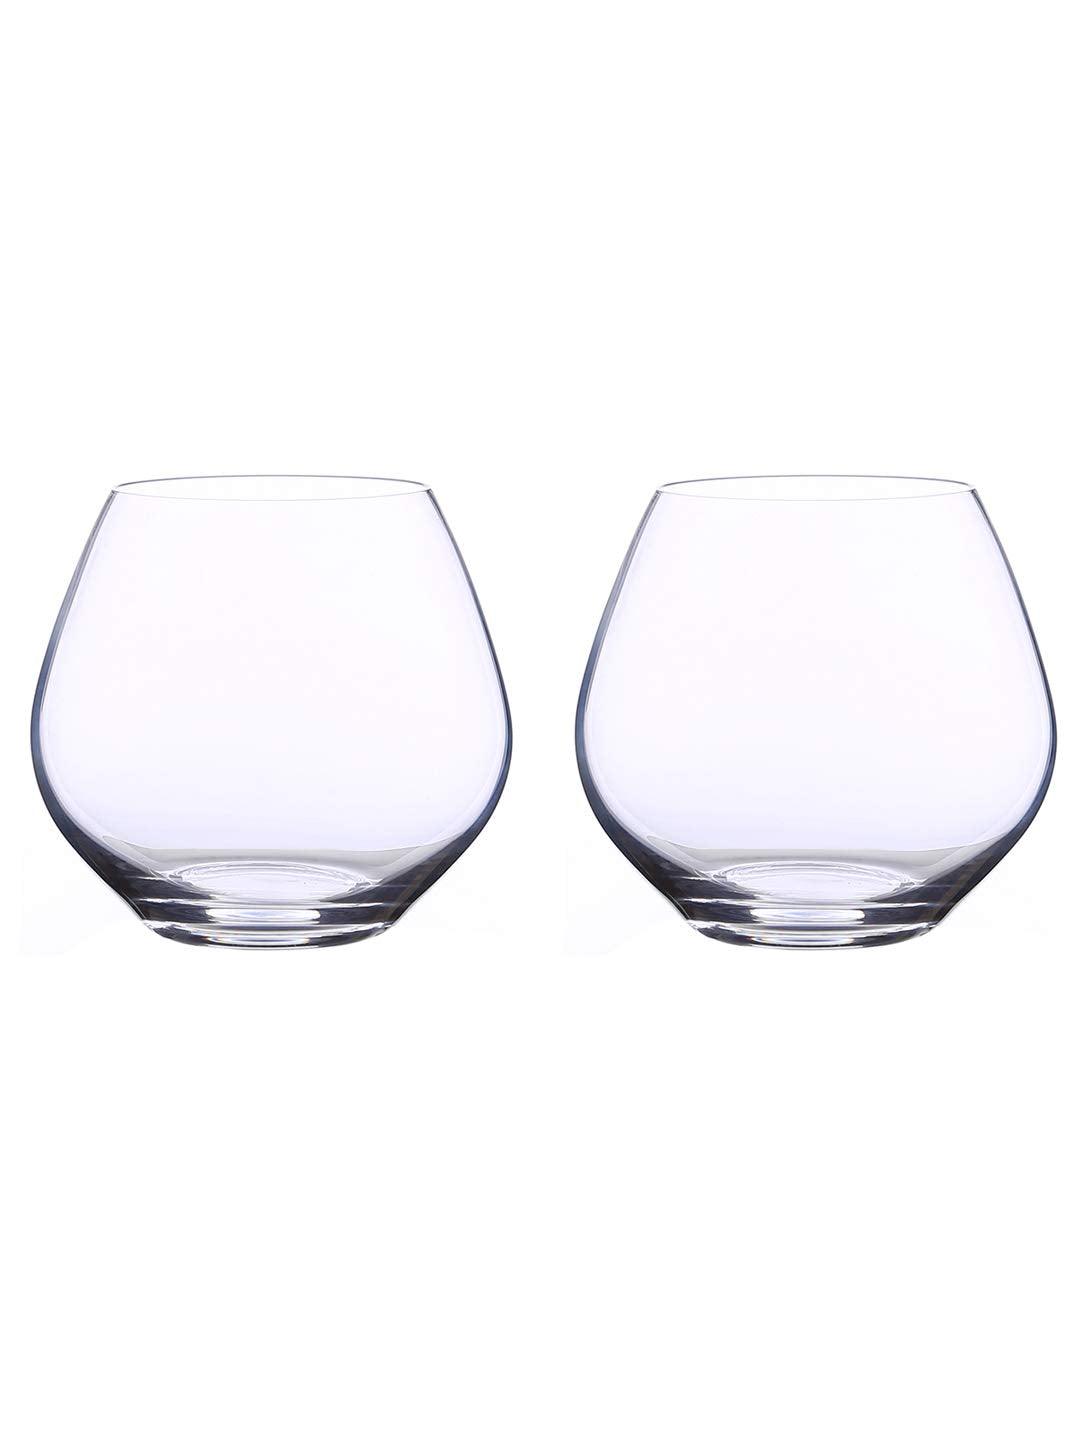 Wine Glass Set, 440 ML, Bohemia Crystal Amoroso Stemless ( Set of 2 pcs ) | Wine Glass